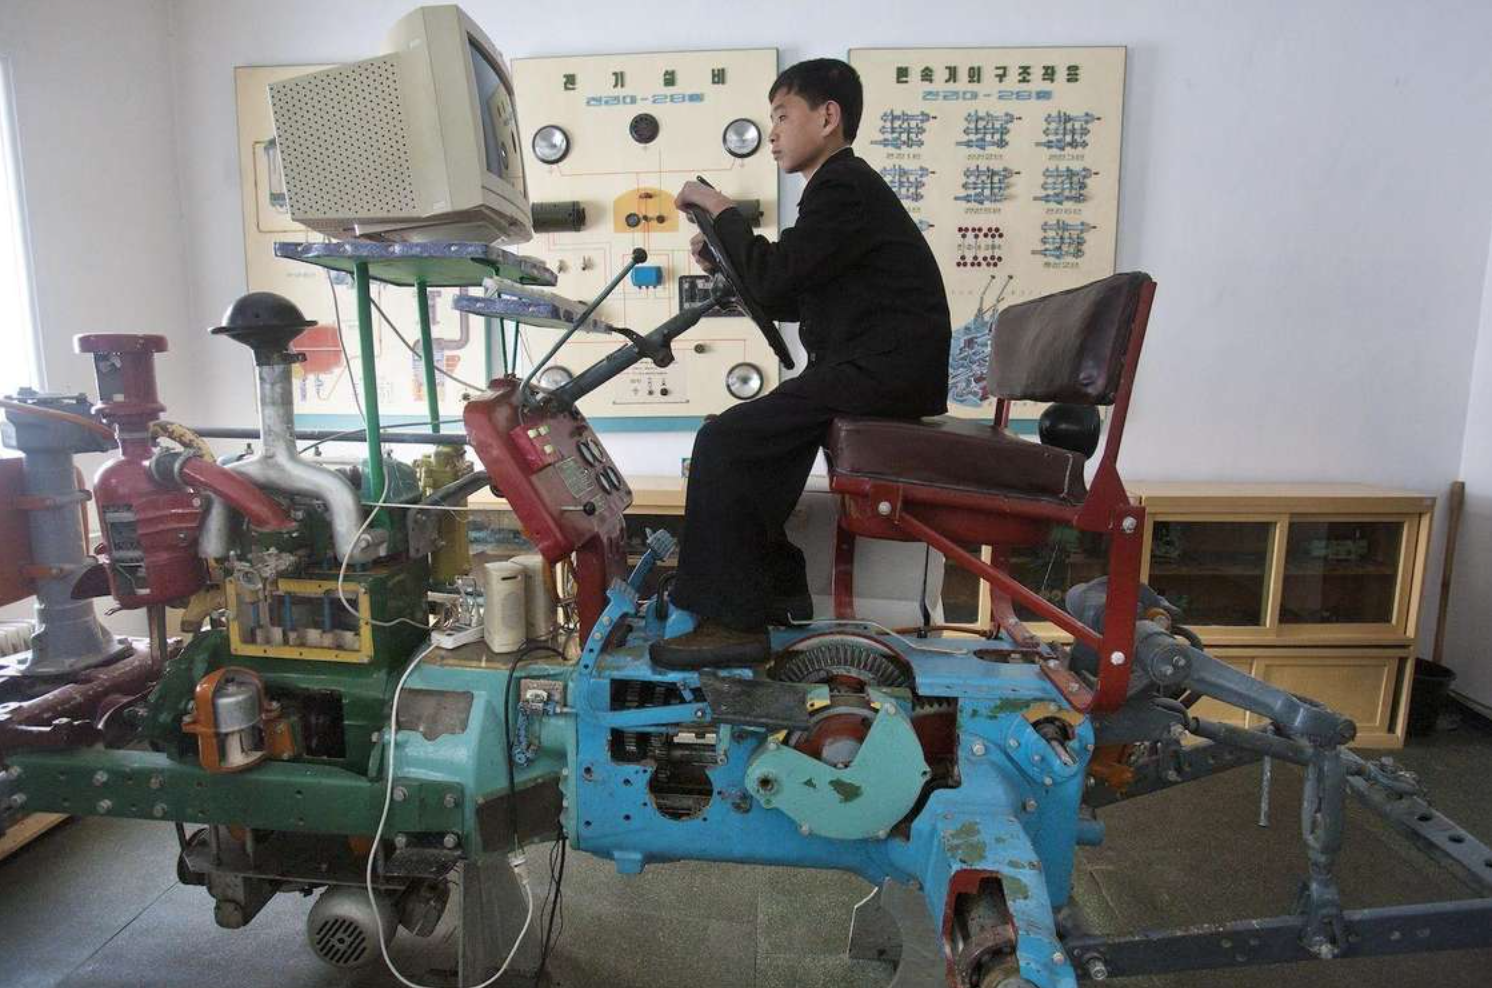 sad and disgusting gamer rigs - north korea tractor simulator - Wal Ita